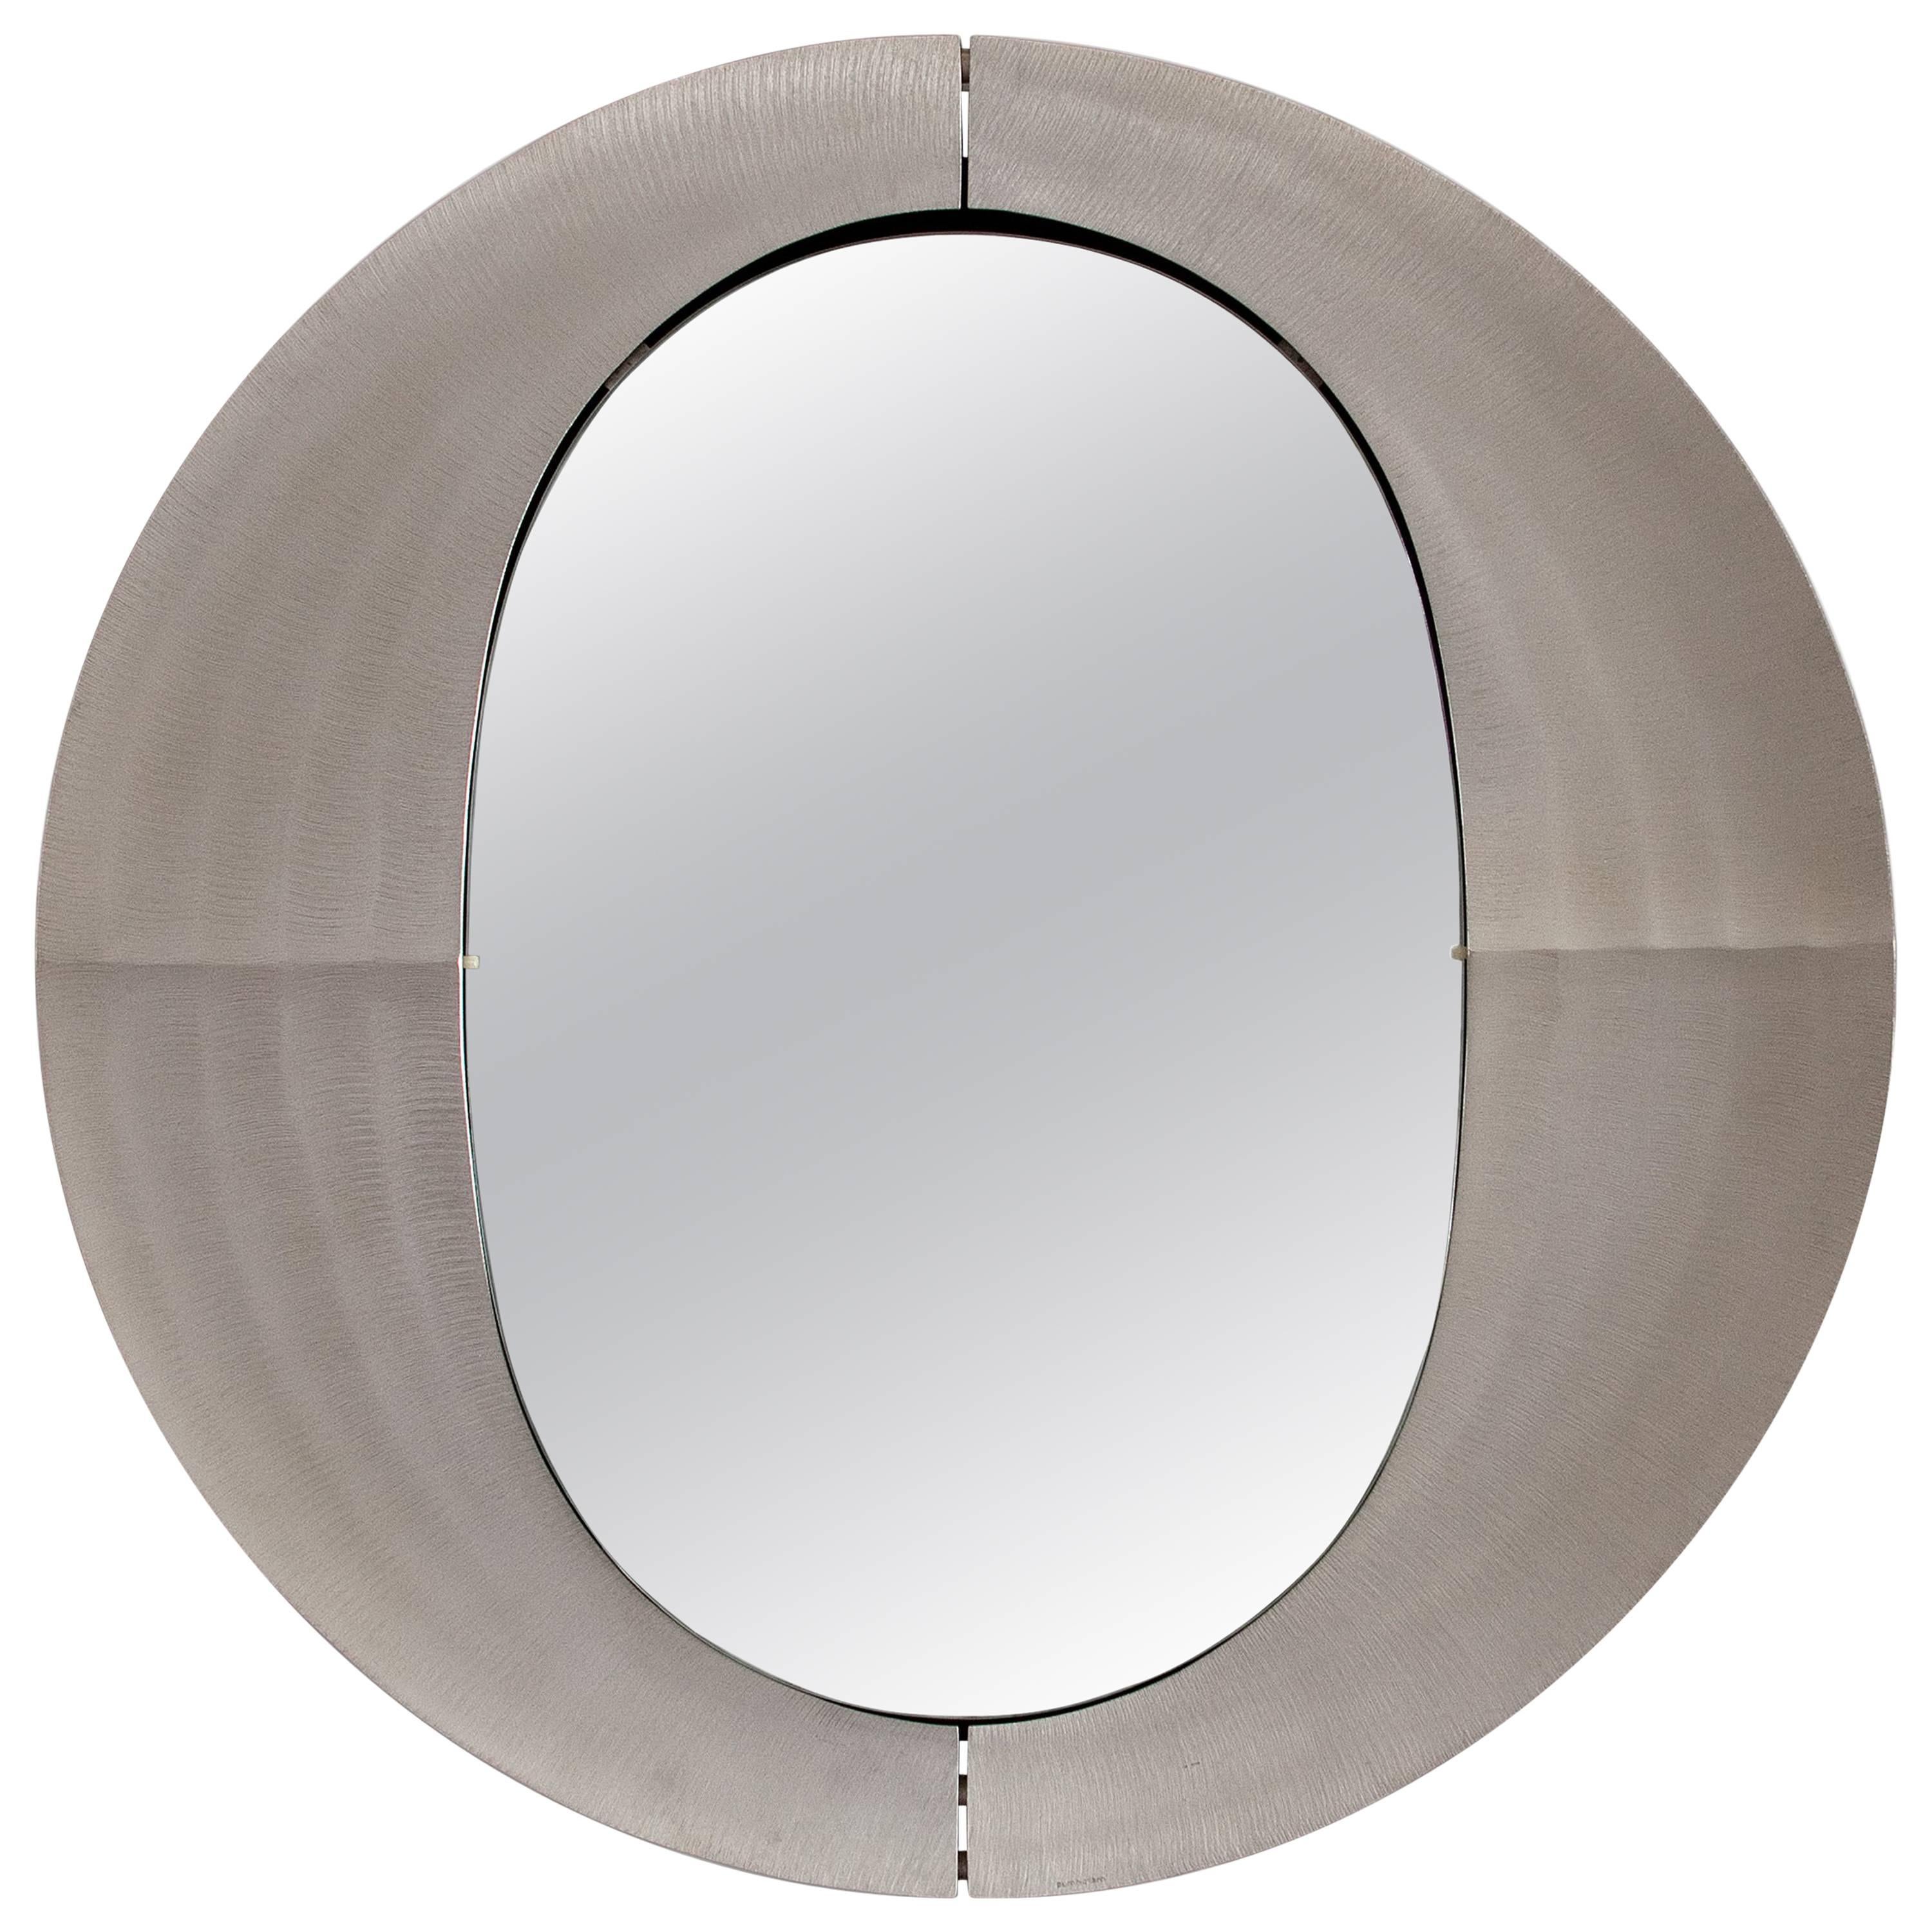 Lorenzo Burchiellaro, an Italian Etched Aluminium Mirror For Sale